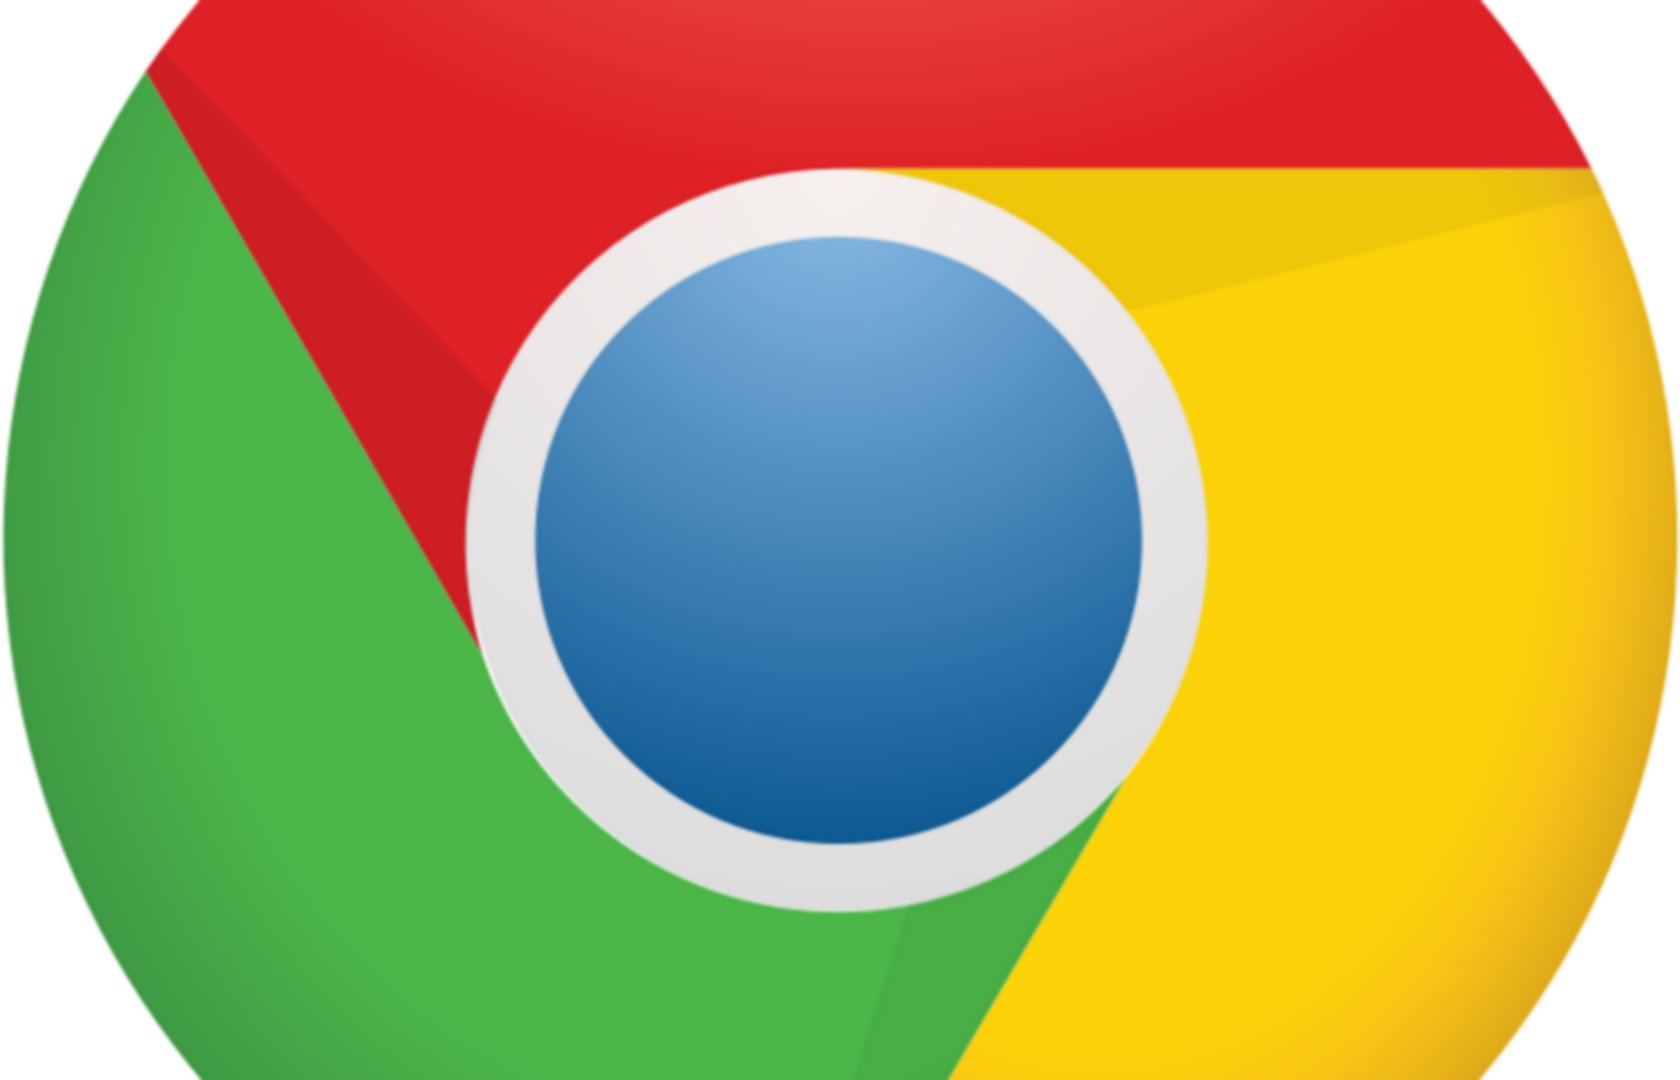 google chrome web store adblock